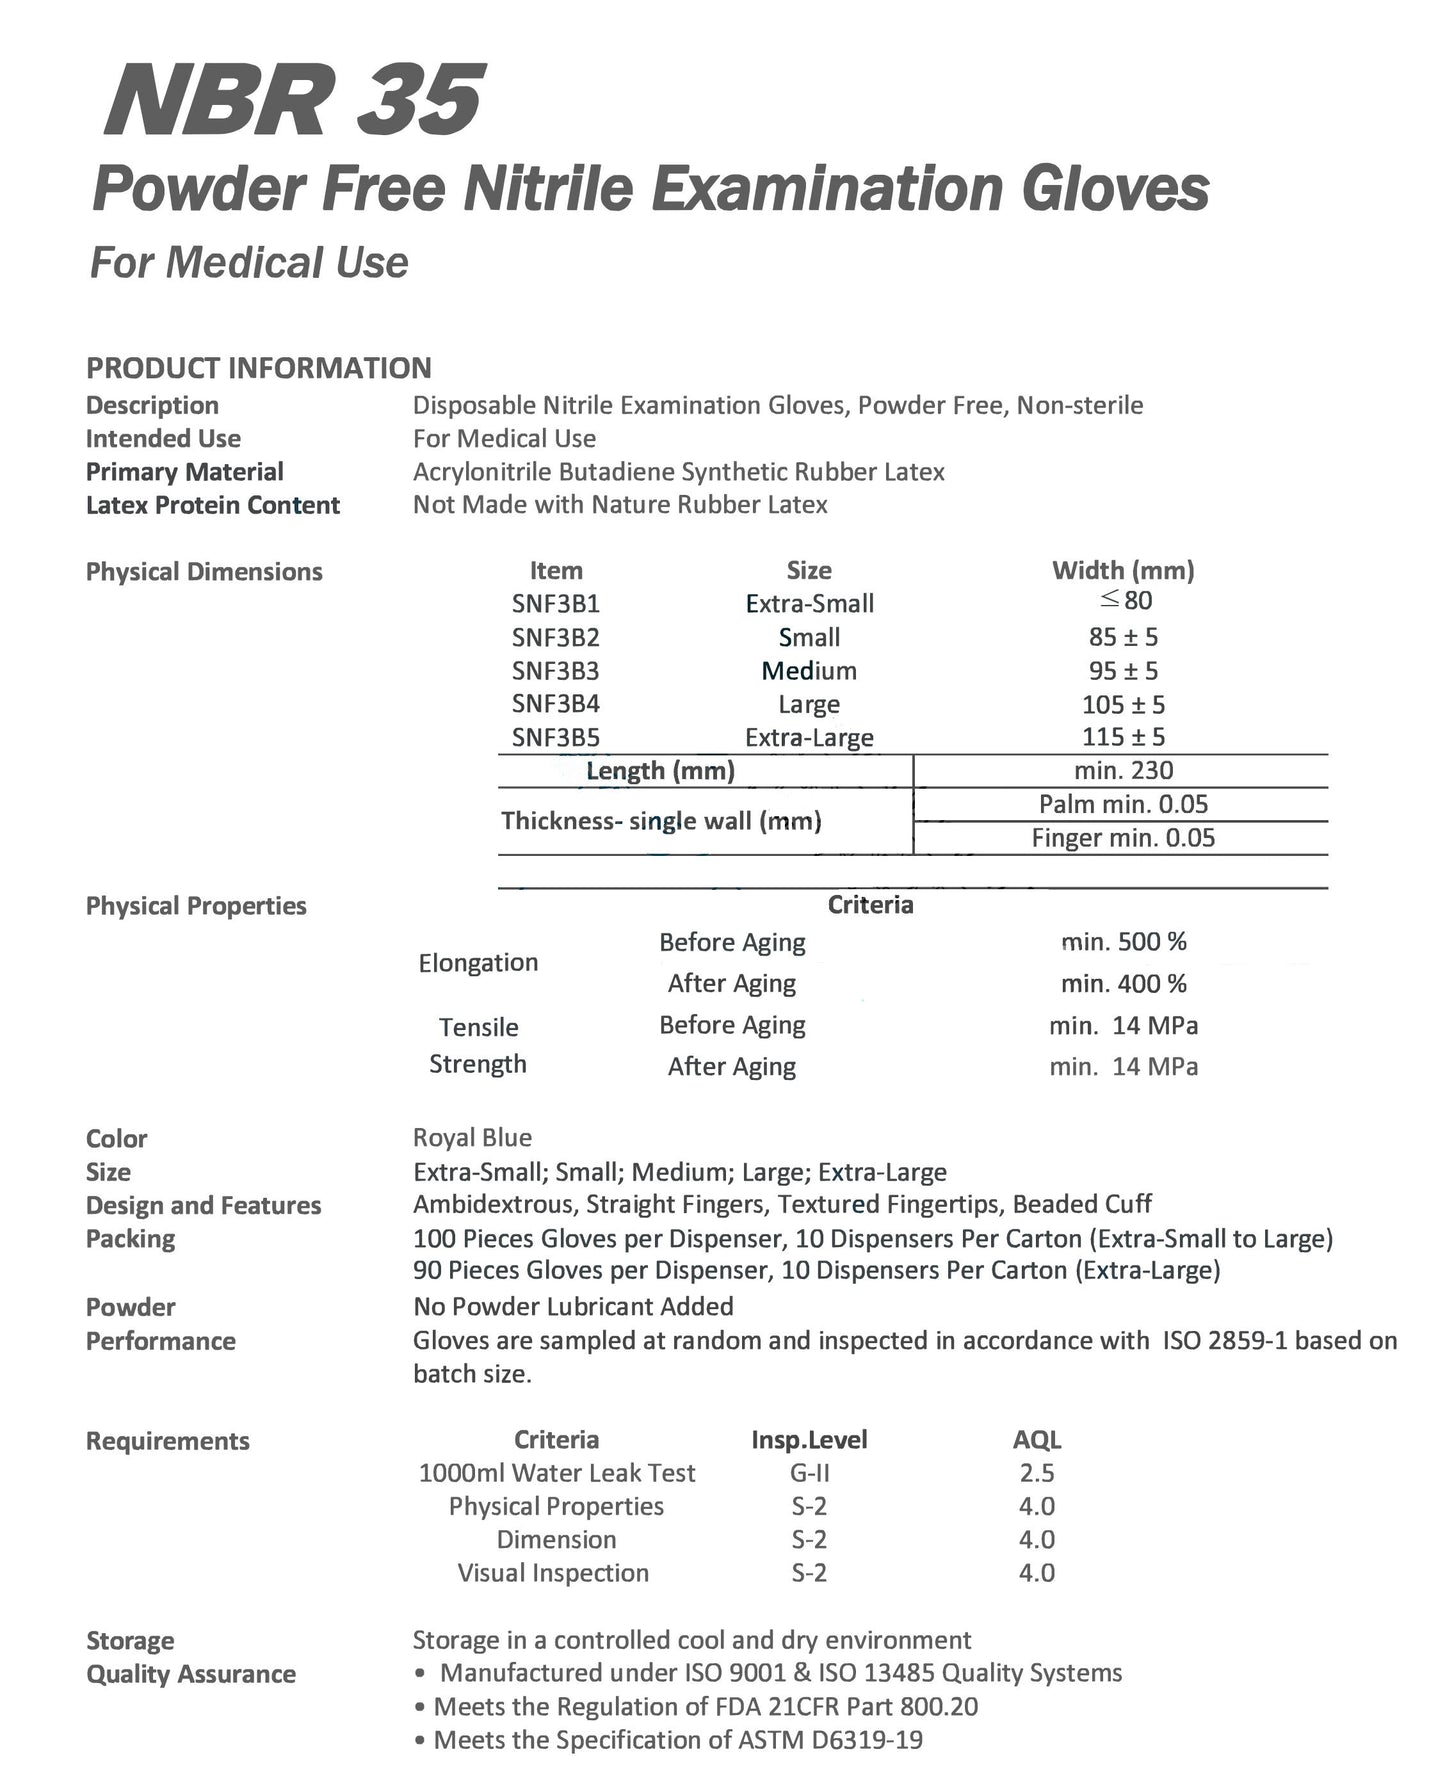 NBR powder free nitrile examination gloves details for medical use.